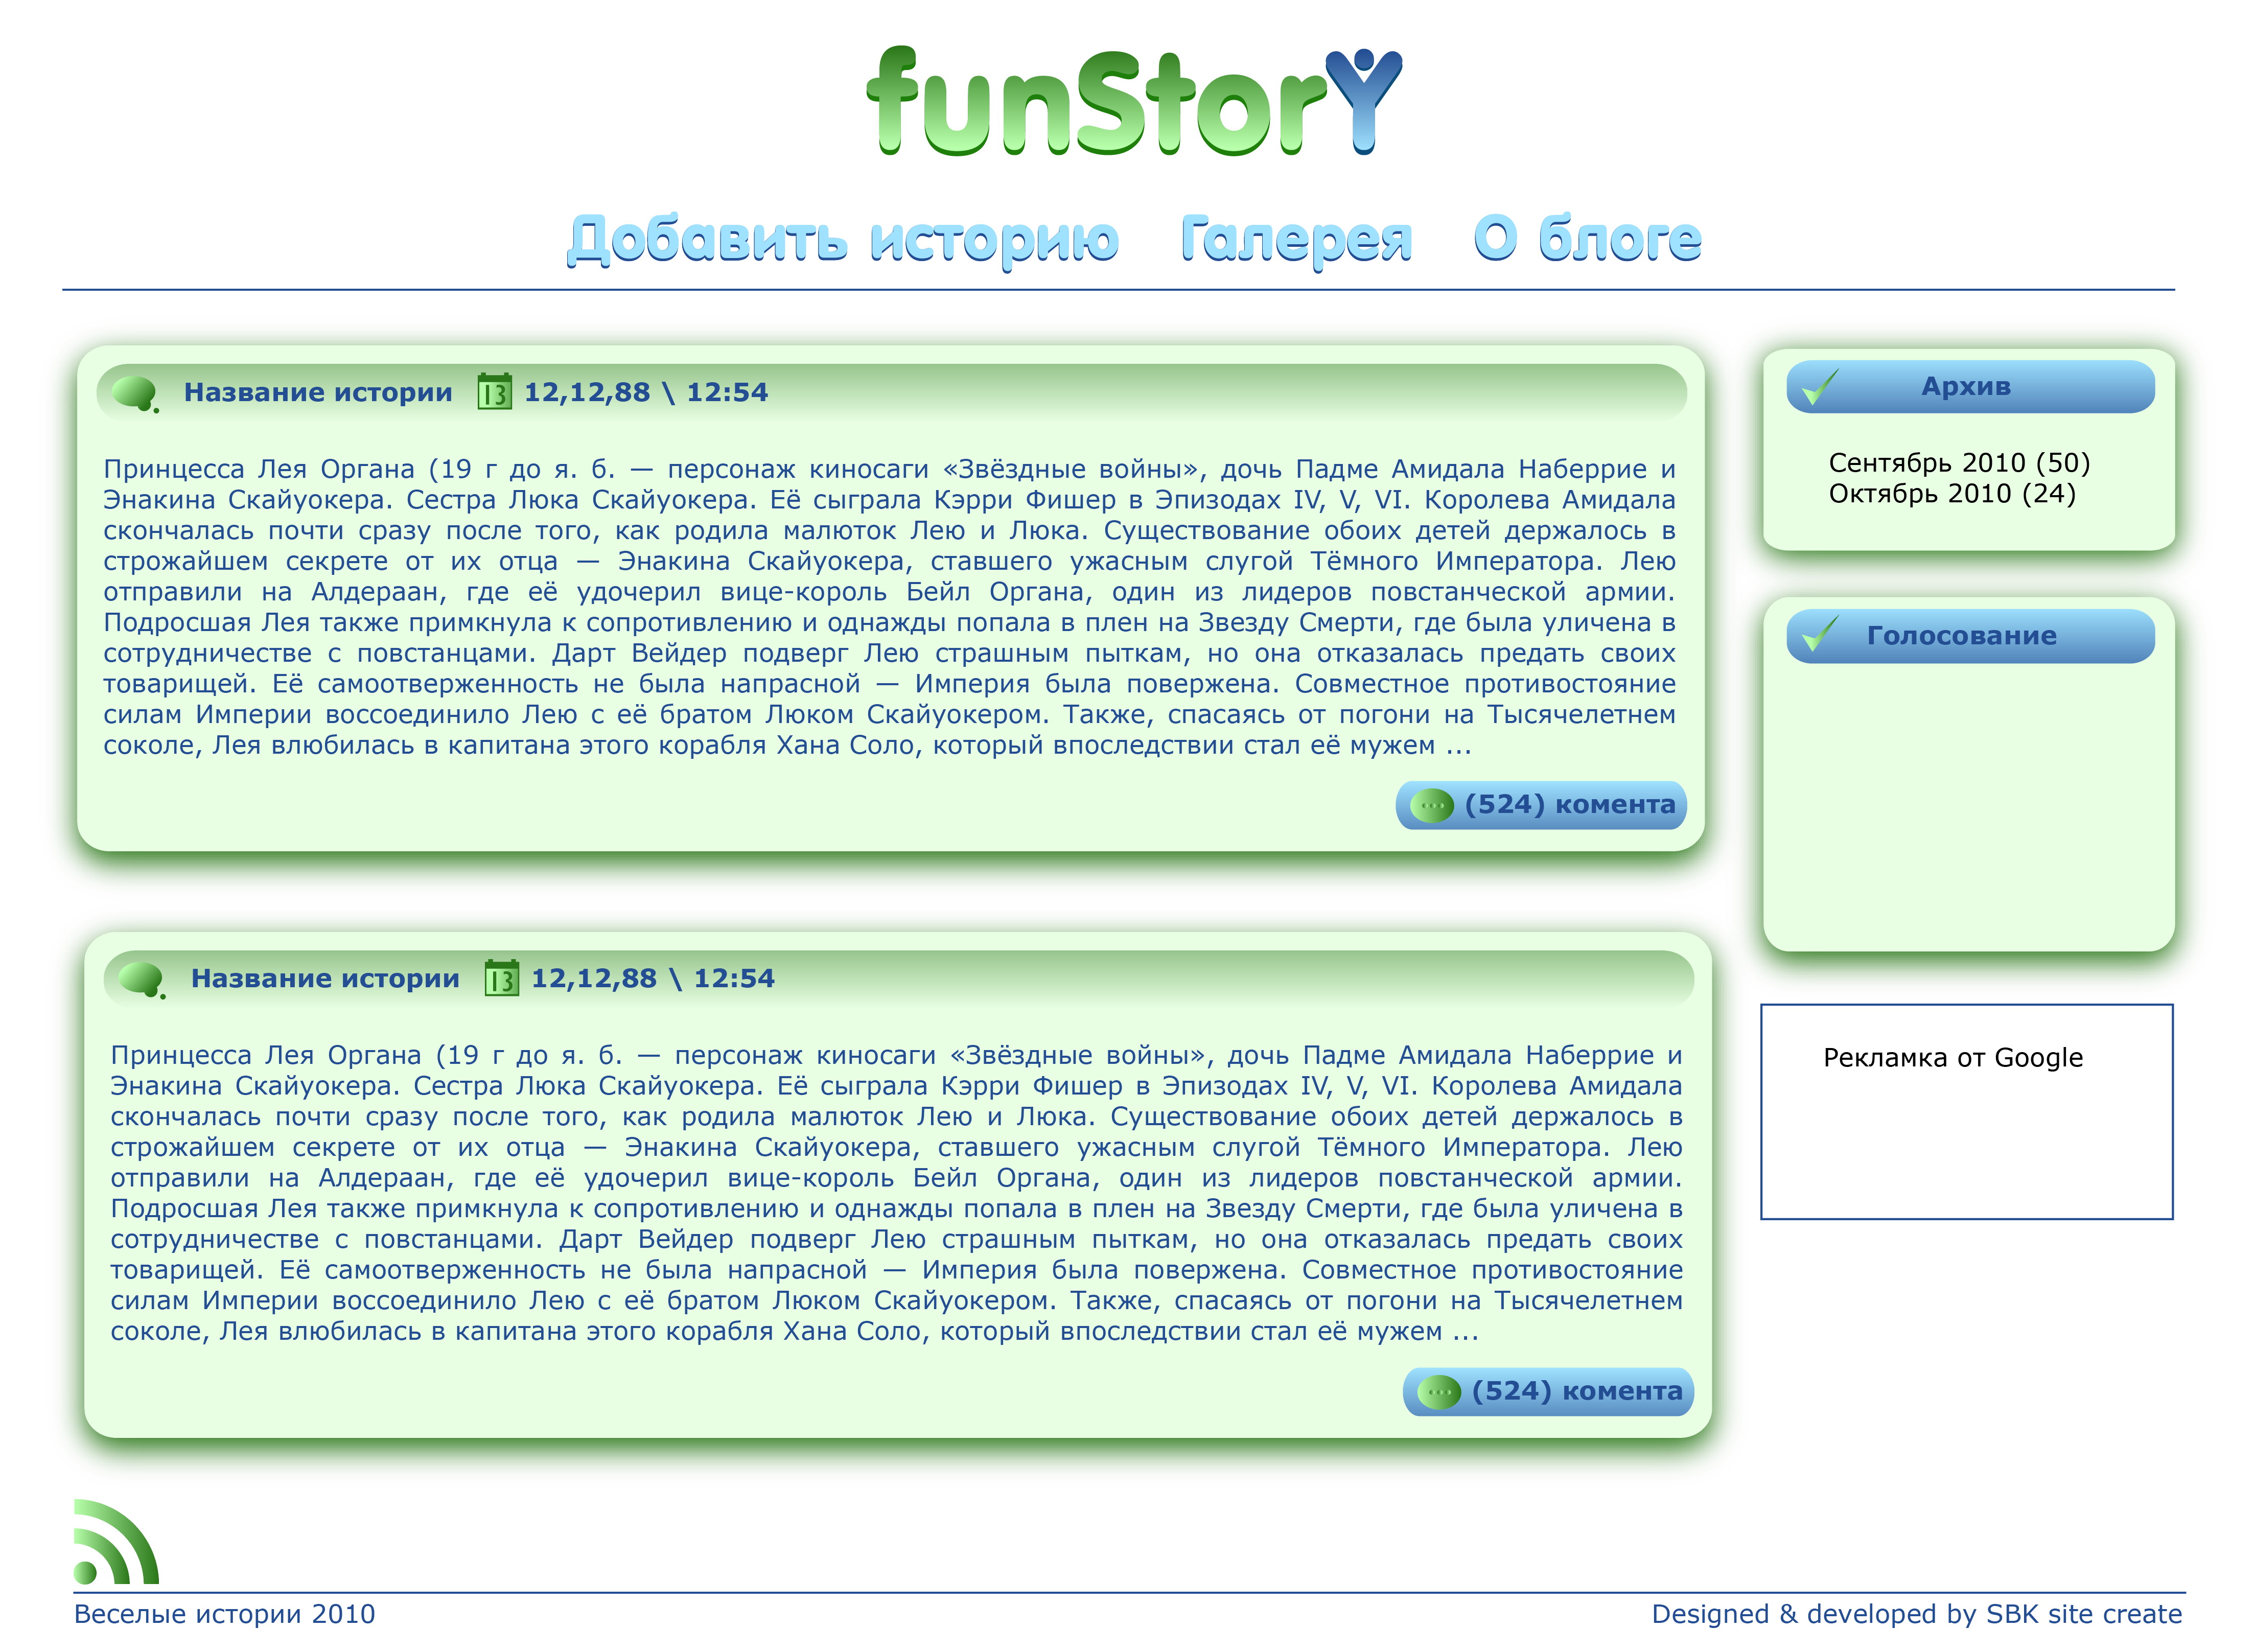 Блог Funstory (http://www.funstory.org.ua)